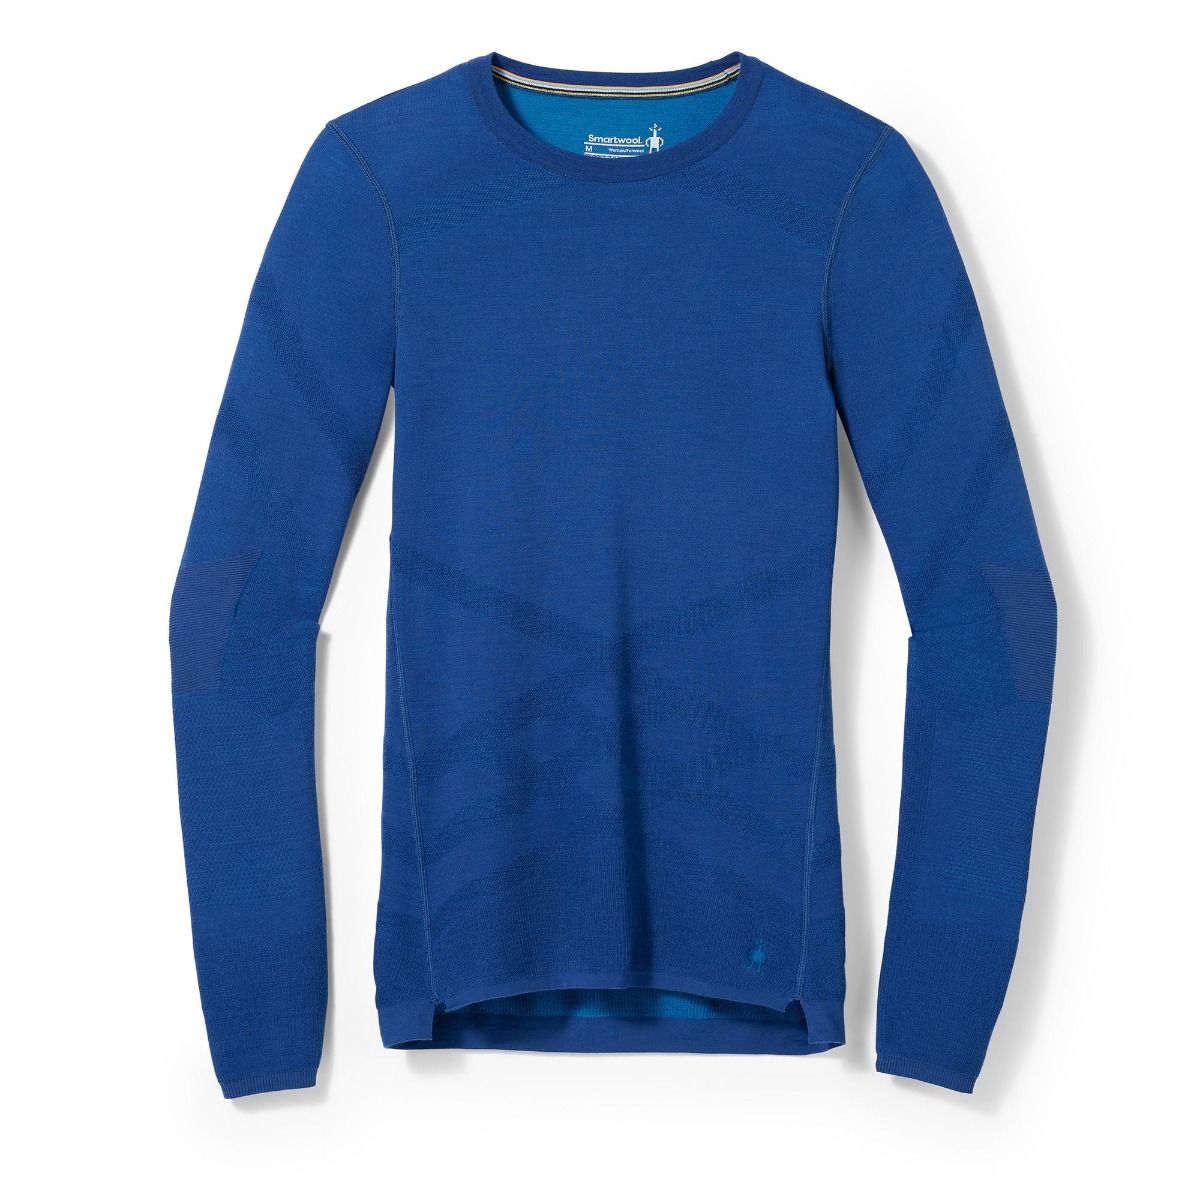 Womens Merino Sport Jacket Knitting Kit - A/W - Advanced - (6282-3)